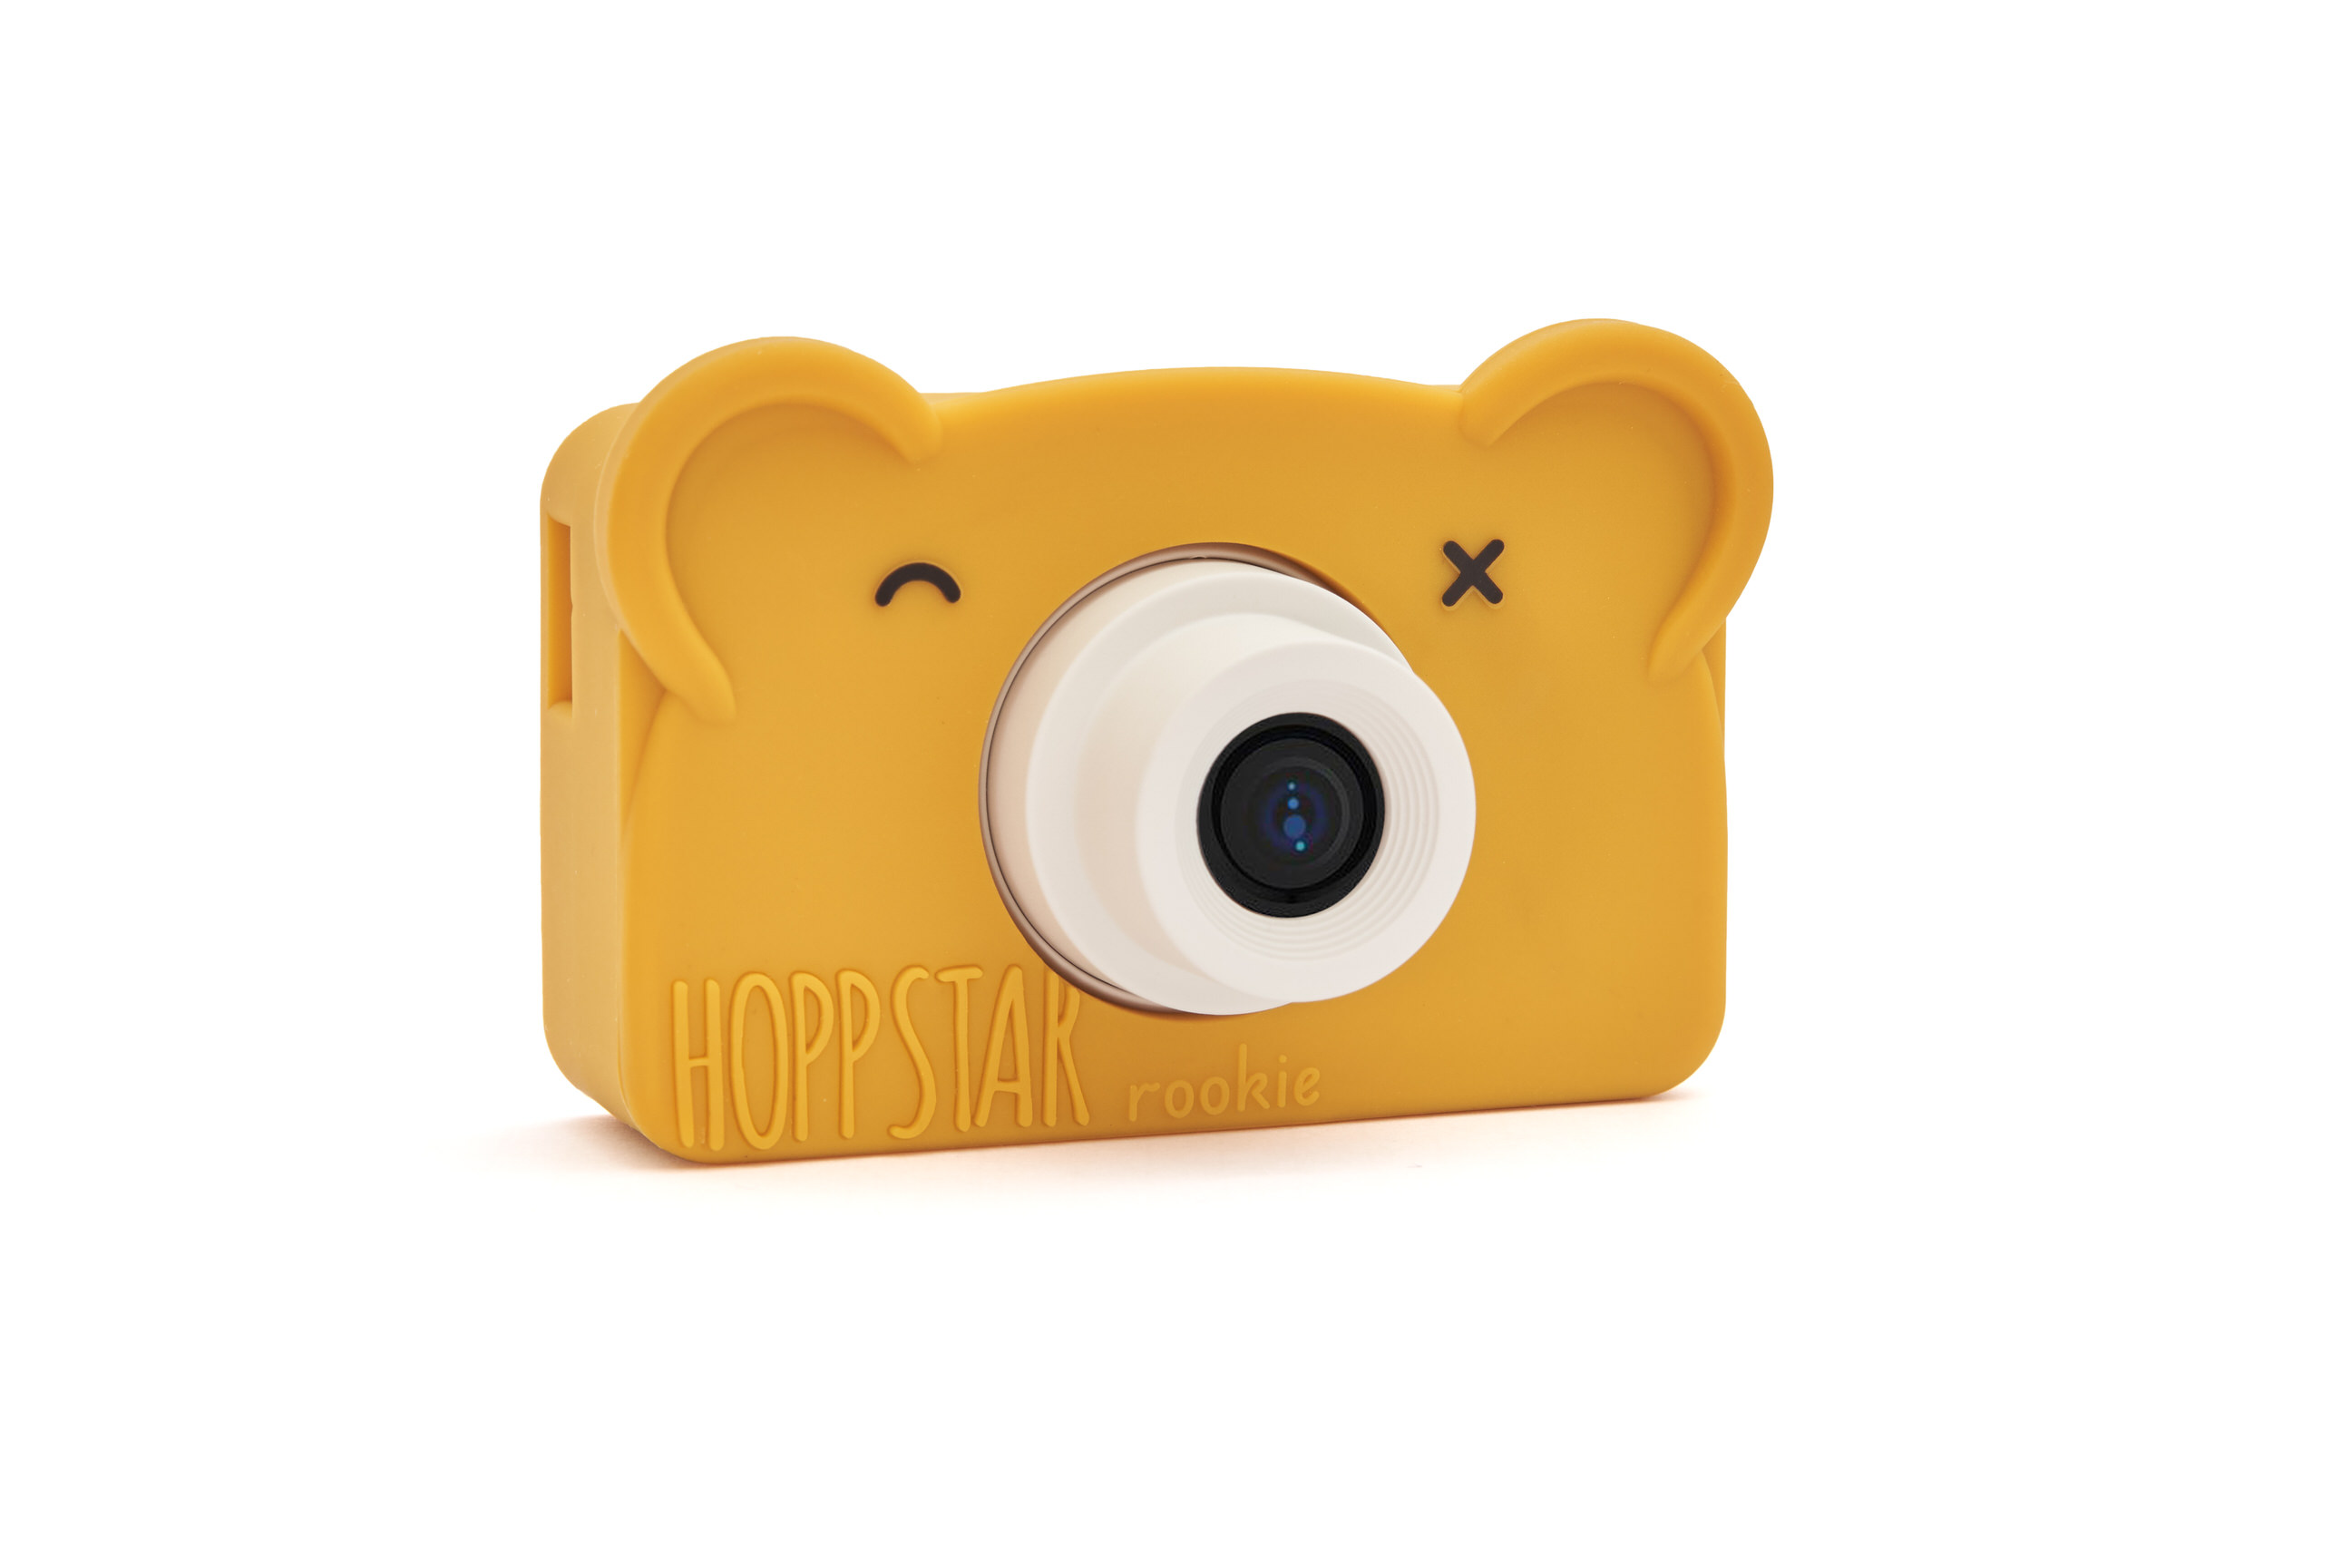 Hoppstar Rookie Kamera mit Bear Honey (Senfgelb) Silikonhülle, Frontalansicht leicht schräg